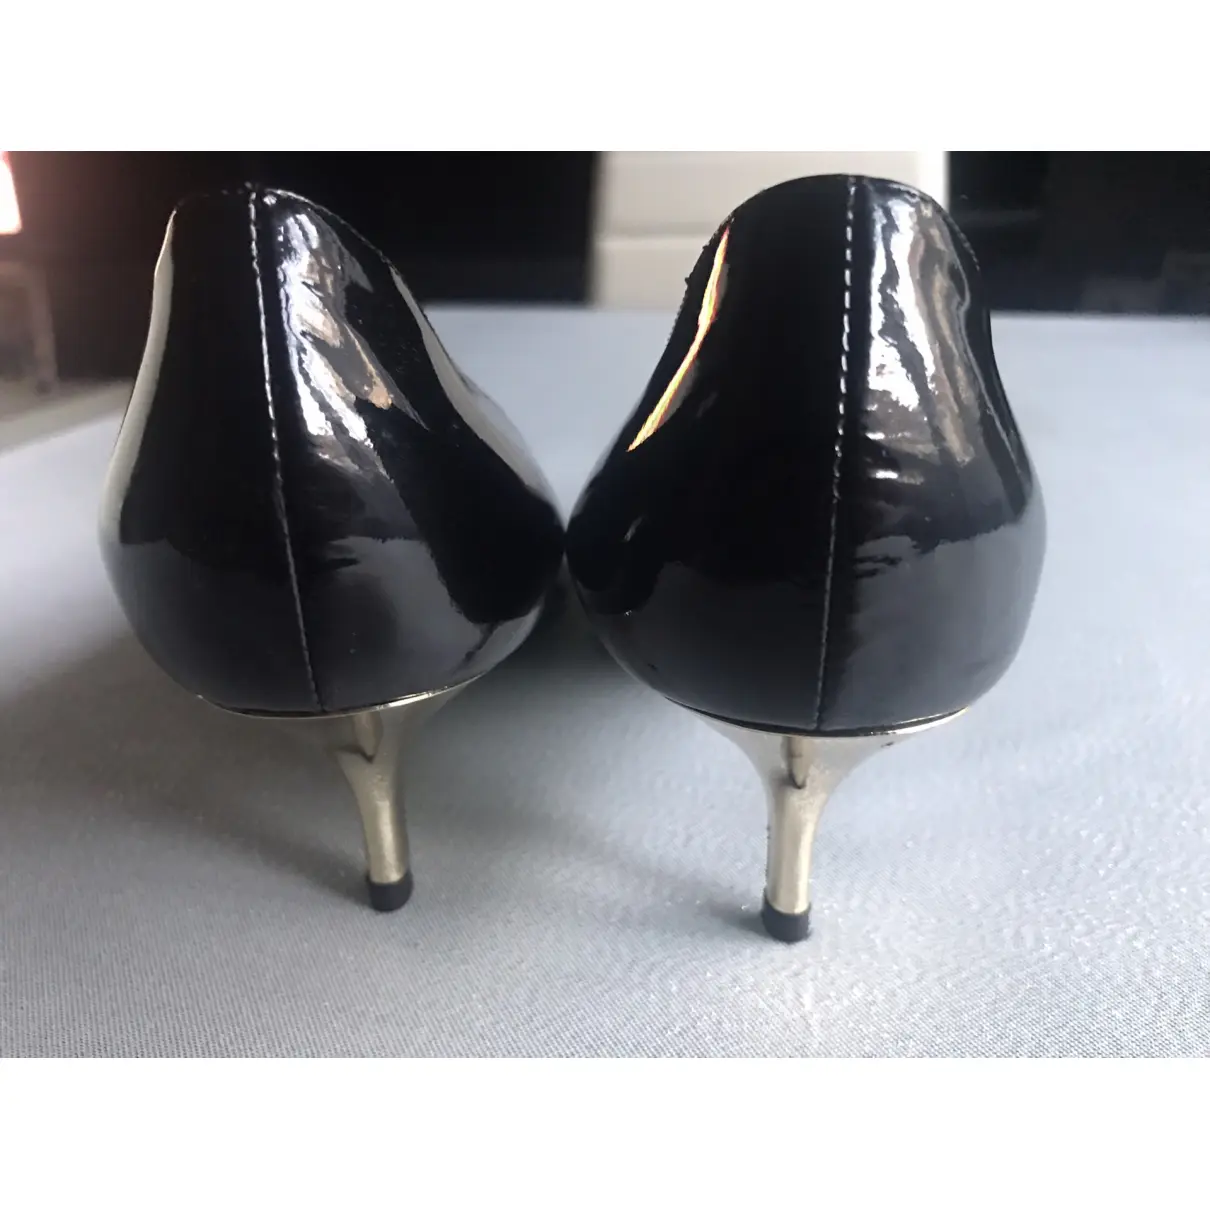 Patent leather heels La Perla